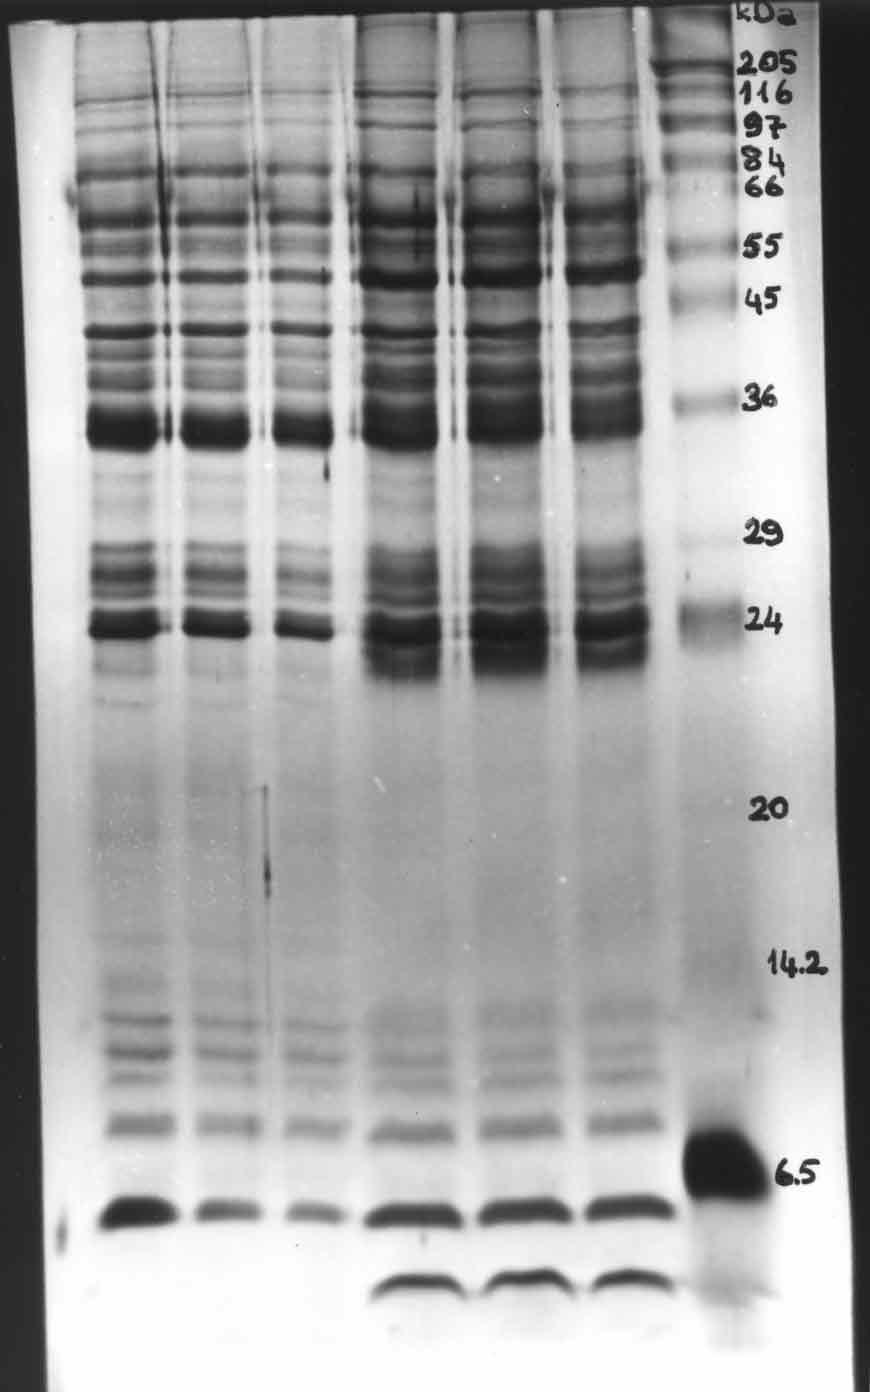 B. GÖNENÇ, H. O. SARIMEHMETO LU, M. KARA, F. KIRCALI Figure 4. Detected protein bands in E/S antigens of Fasciola hepatica using SDS-PAGE. Figure 5.